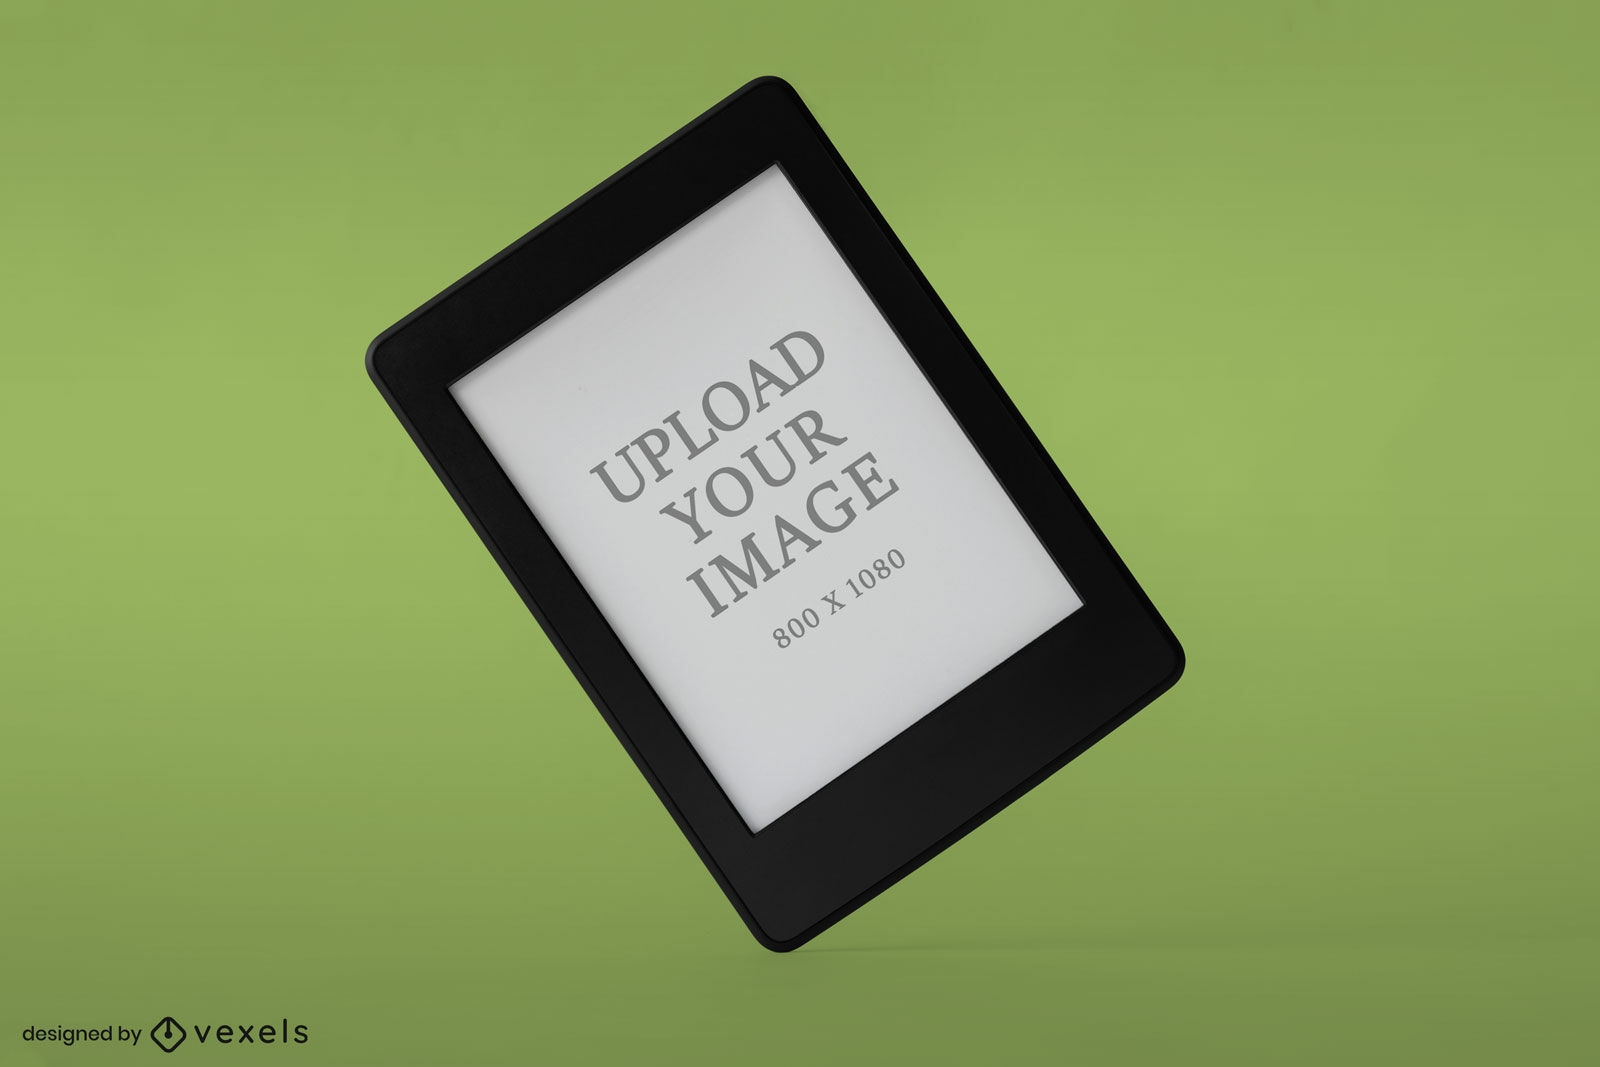 Fundo liso verde da maquete do Kindle